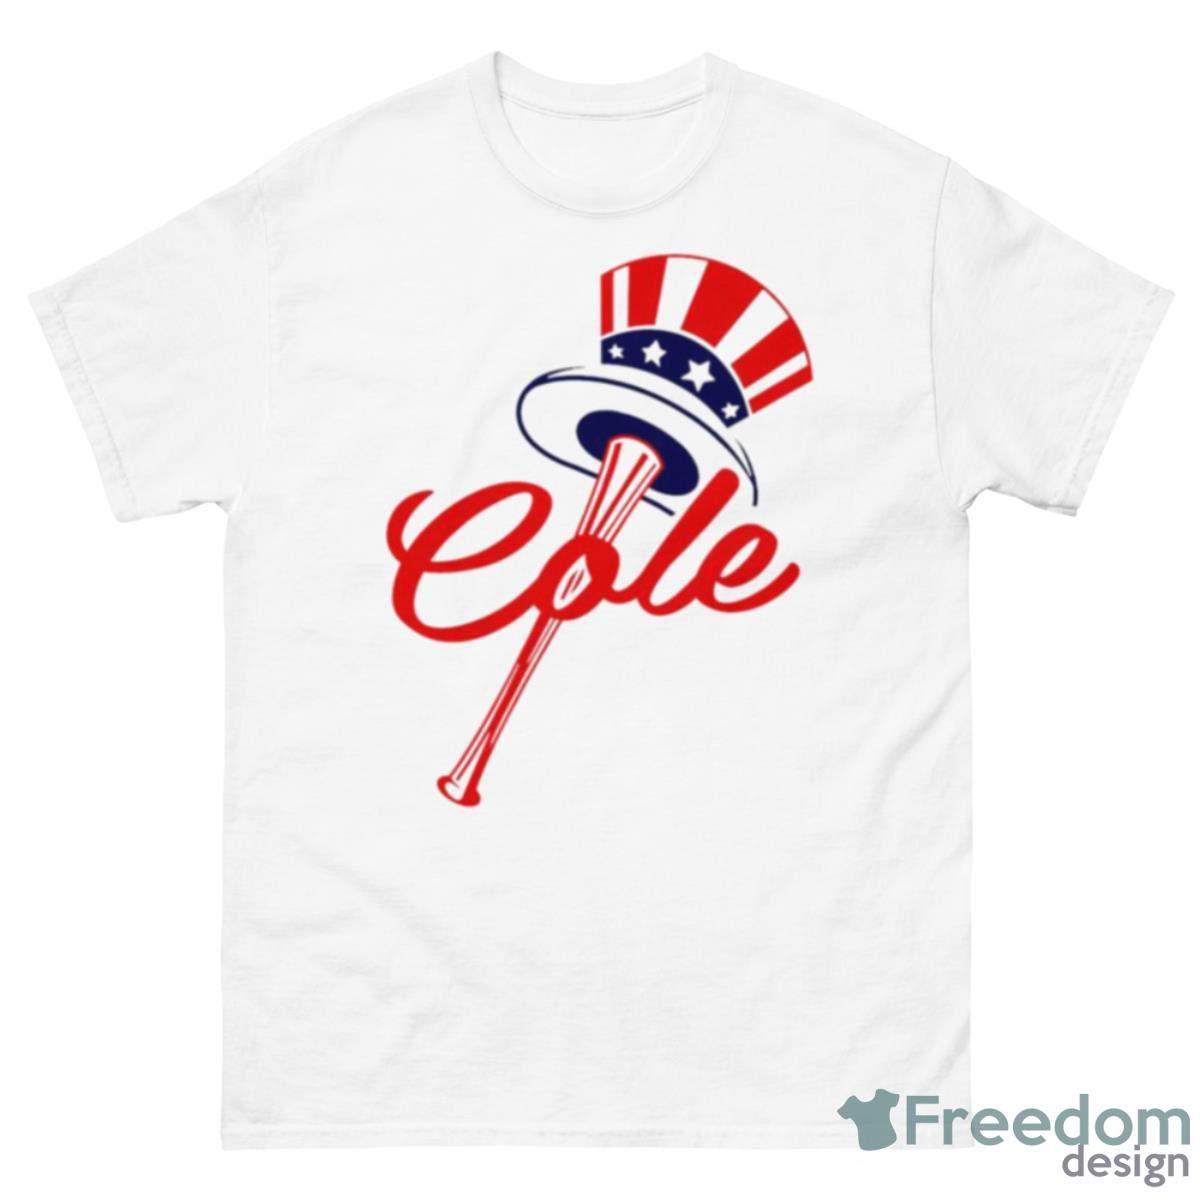 Cole New York Yankees Shirt - Freedomdesign